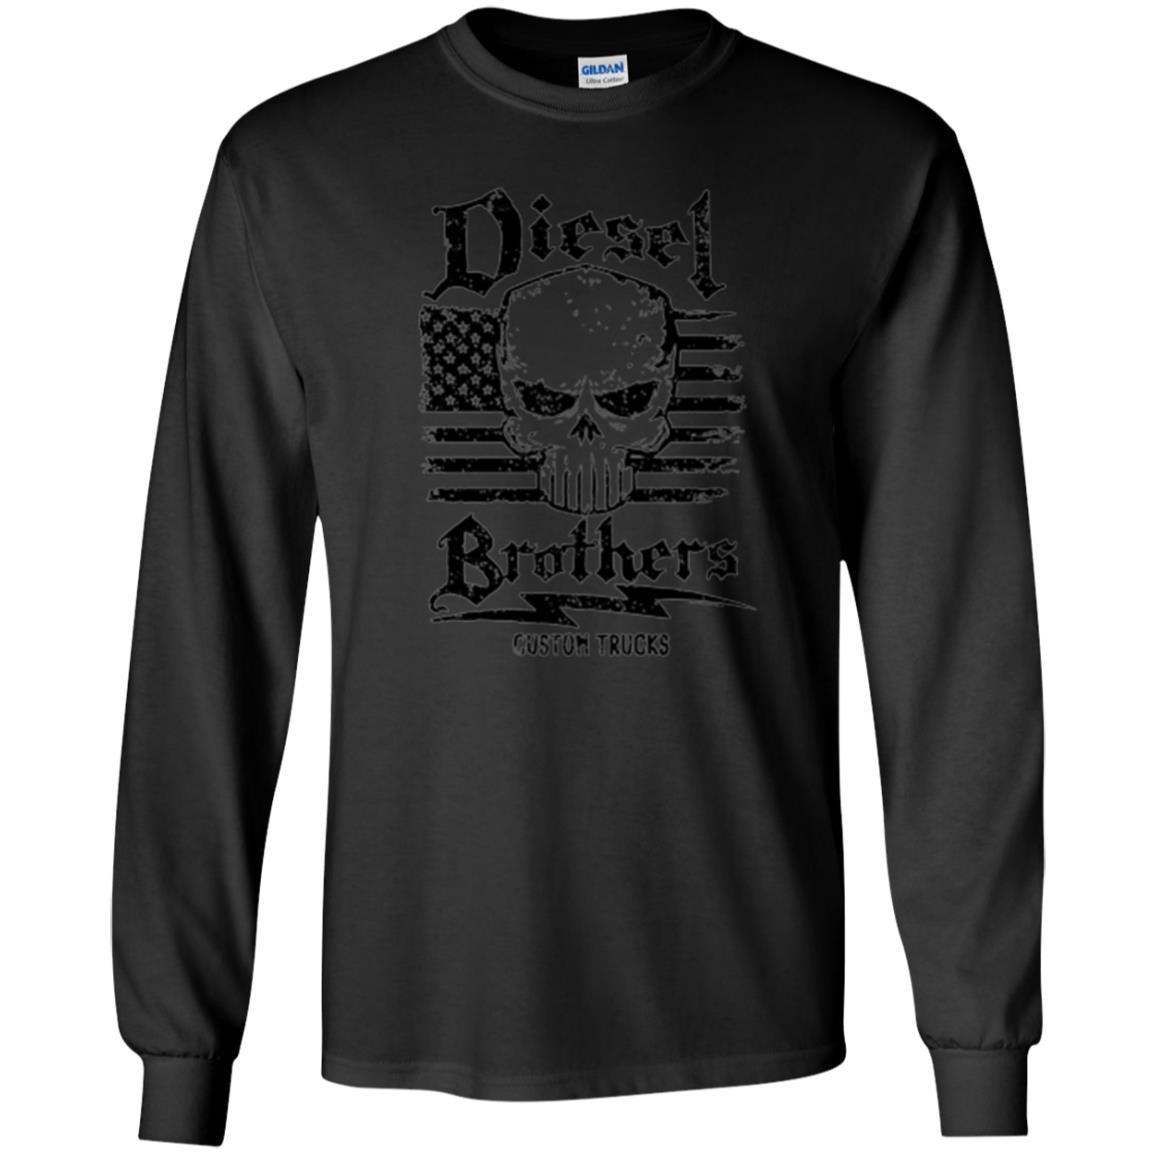 Diesel Brothers Custom Trucks Skull Usa Flag T-shirt